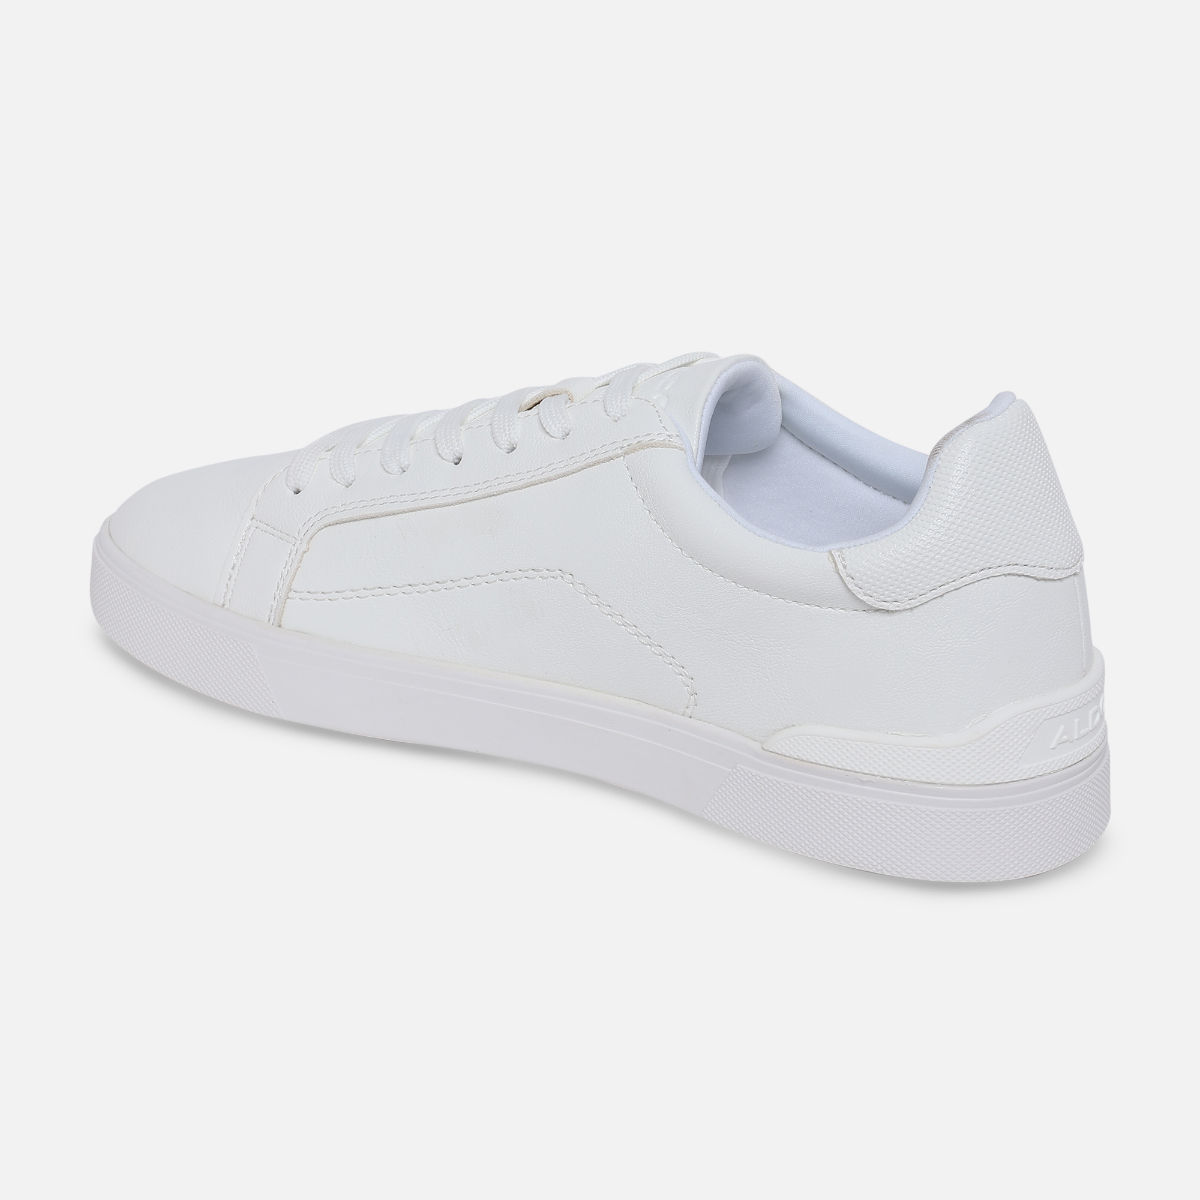 Aldo Introspec Synthetic White Solid Sneakers: Buy Aldo Introspec ...